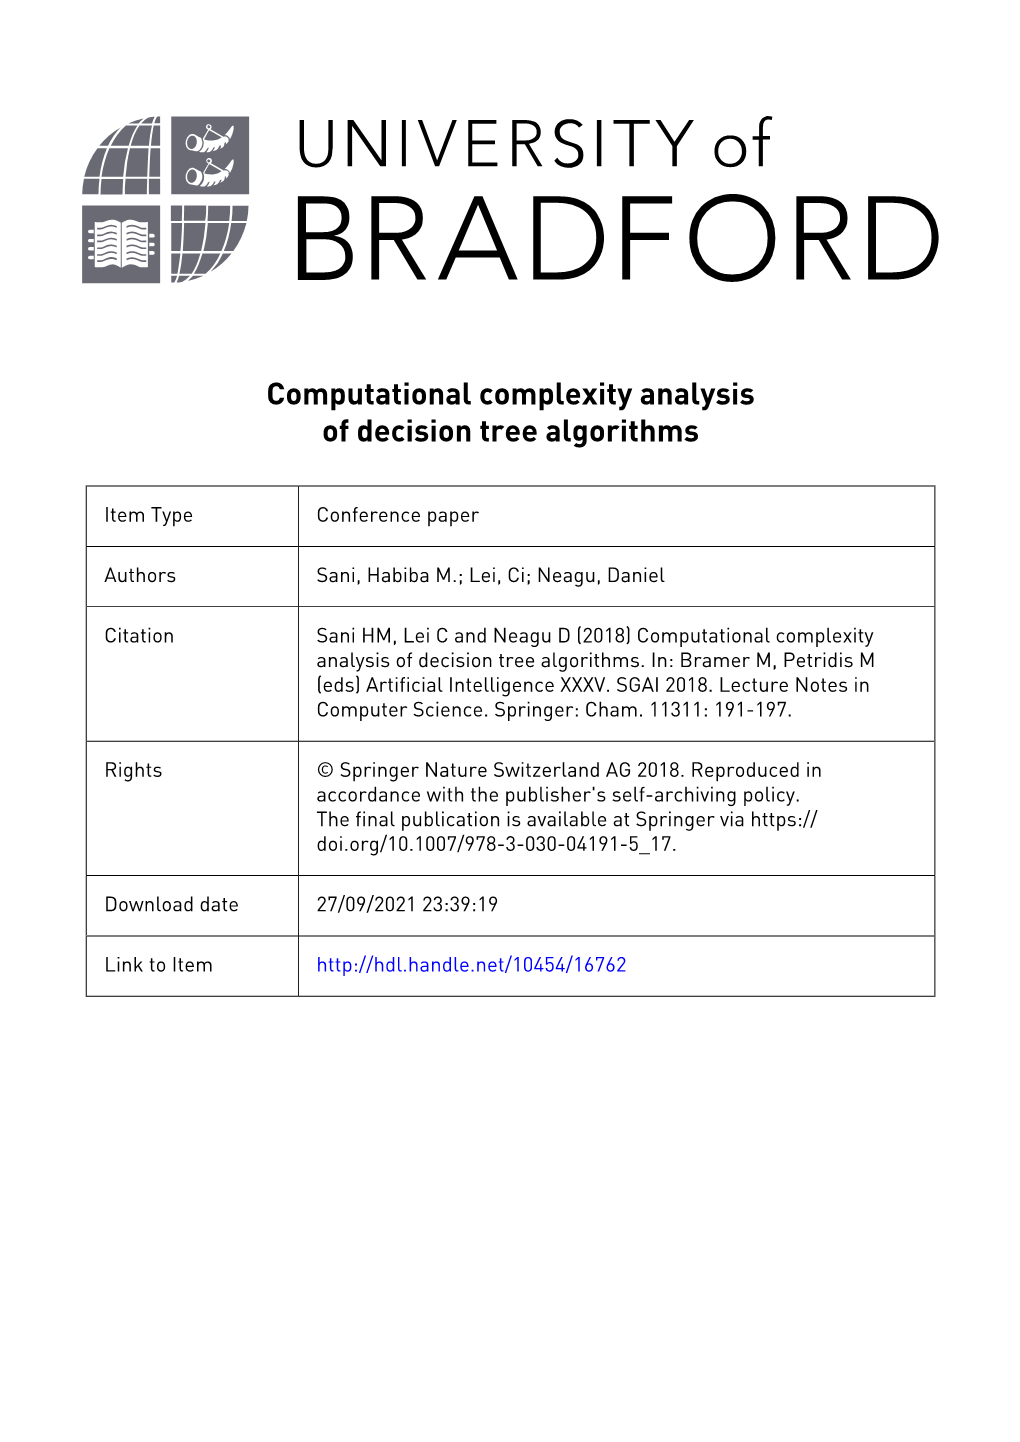 Computational Complexity Analysis of Decision Tree Algorithms